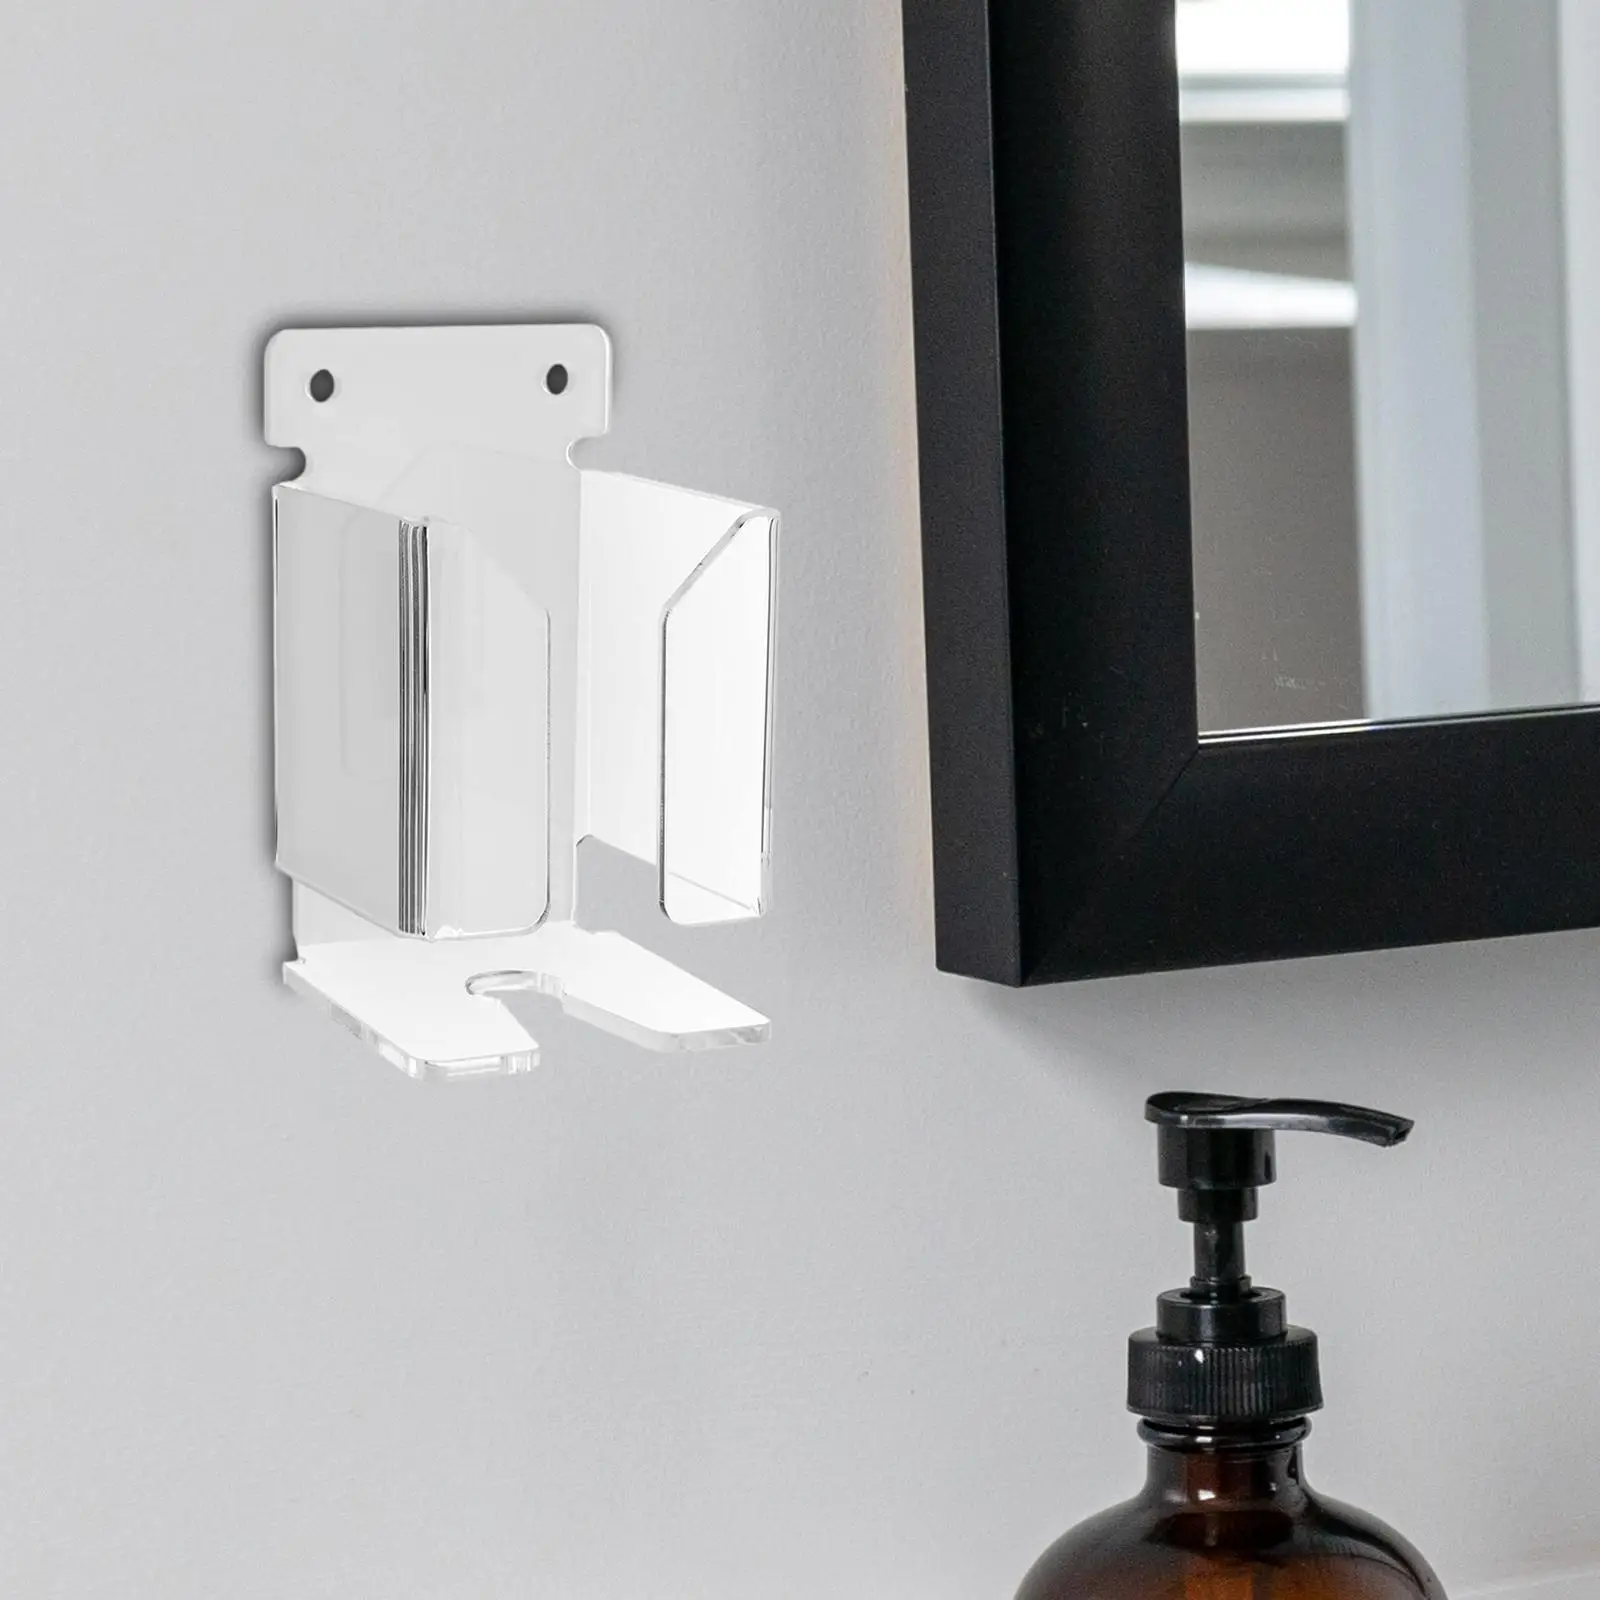 Electric Shaver Wall Mount Holder Utility for Men Rack Two Installation Acrylic Shaver Holder Shaver Hanger for Bathroom Shower